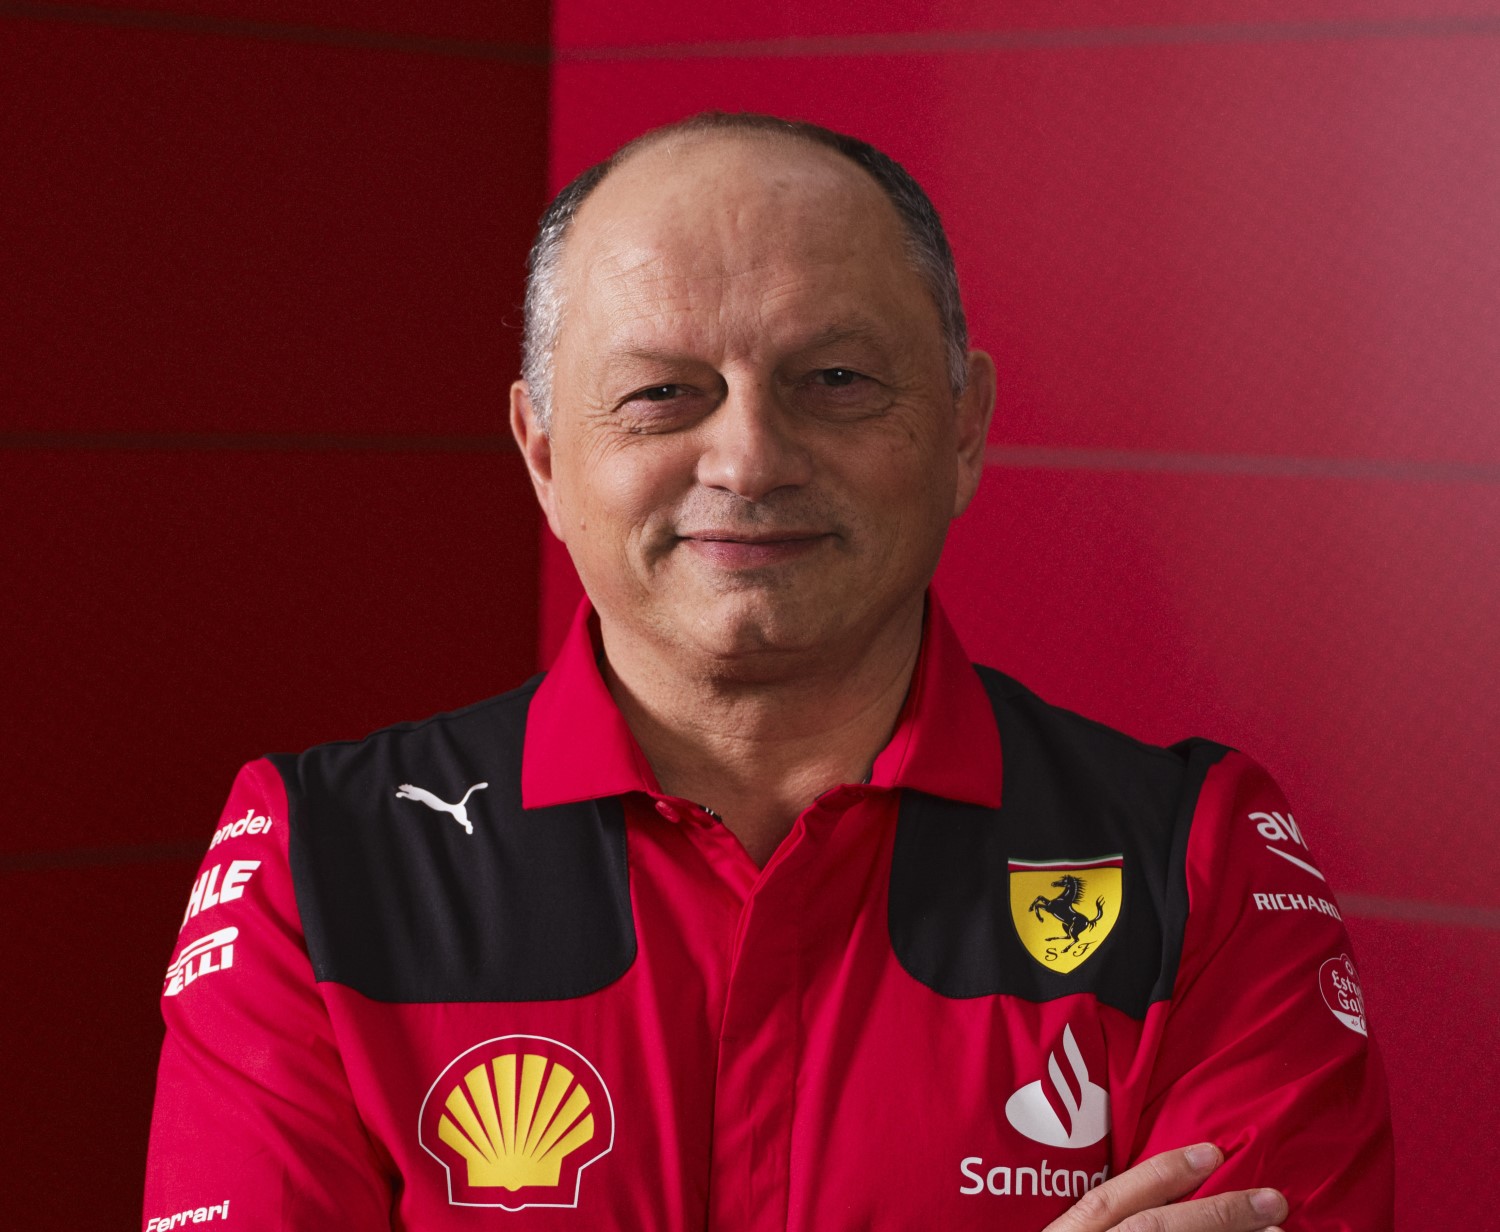 Frédéric Vasseur, Ferrari F1 Team Principal & General Manager